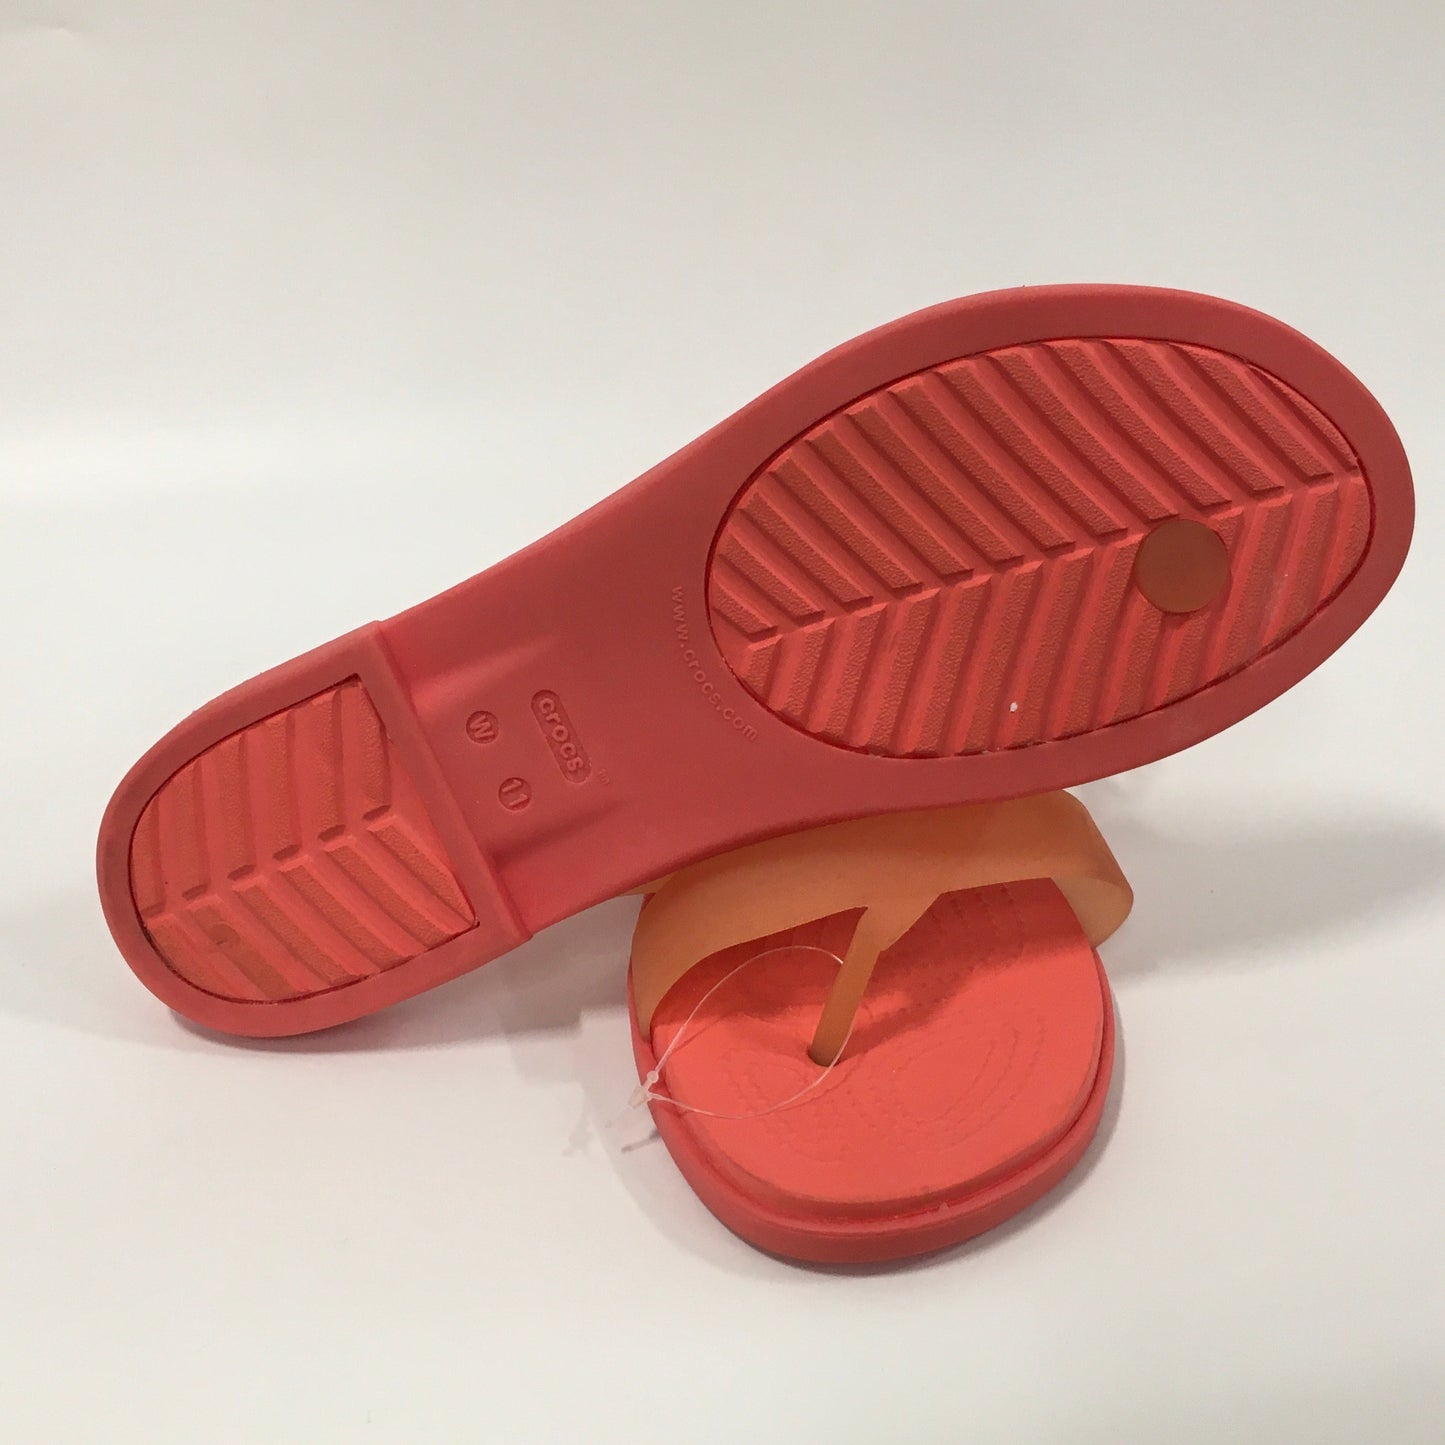 Orange Sandals Flip Flops Crocs, Size 11